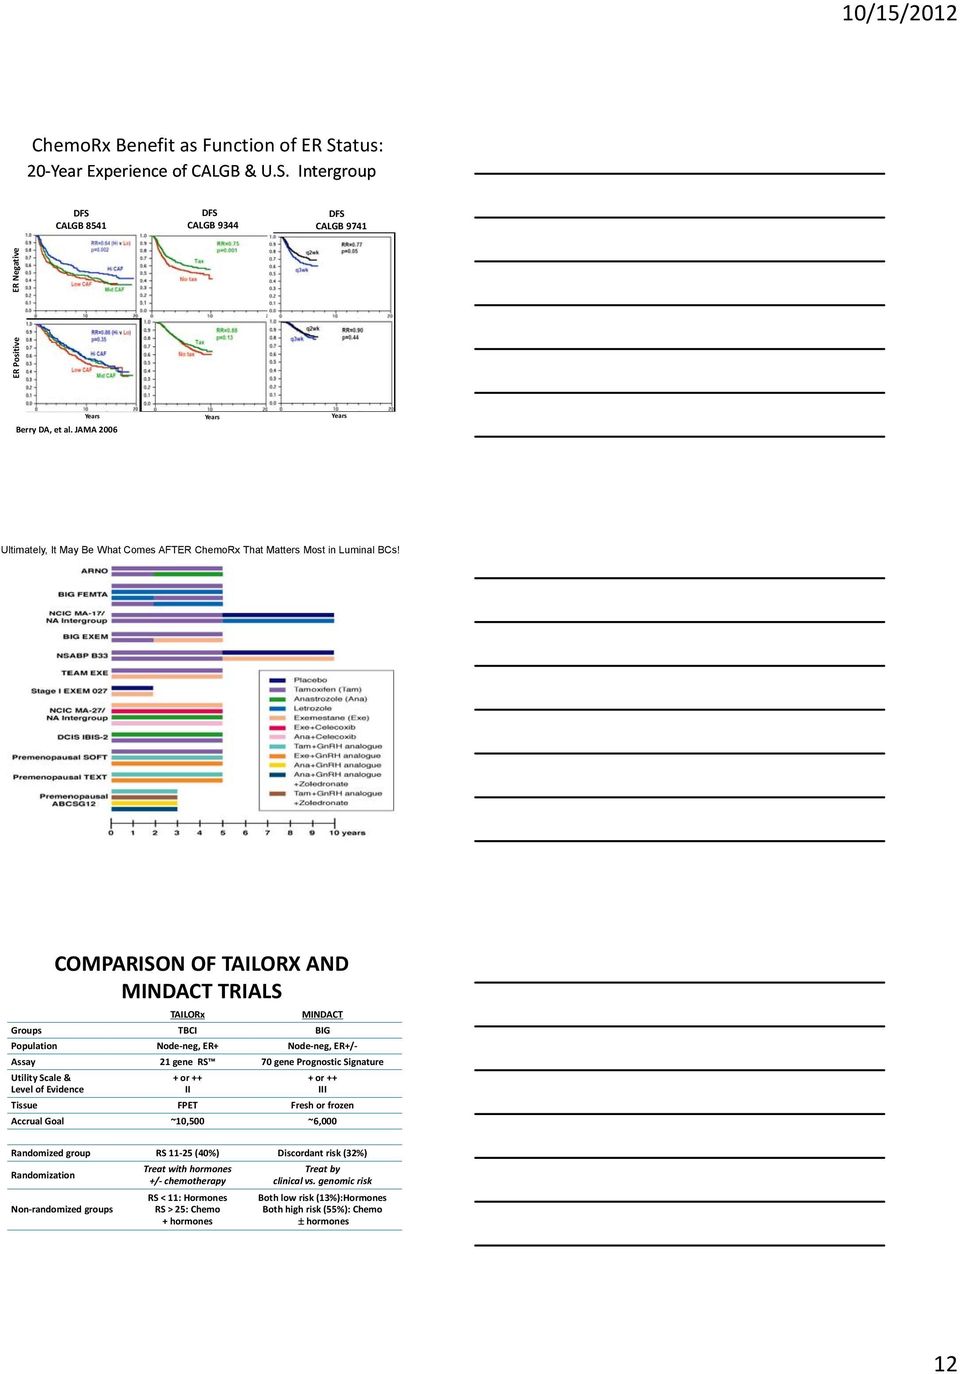 COMPARISON OF TAILORX AND MINDACT TRIALS TAILORx MINDACT Groups TBCI BIG Population Node neg, ER+ Node neg, ER+/ Assay 21 gene RS 70 gene Prognostic Signature Utility Scale & Level of Evidence + or